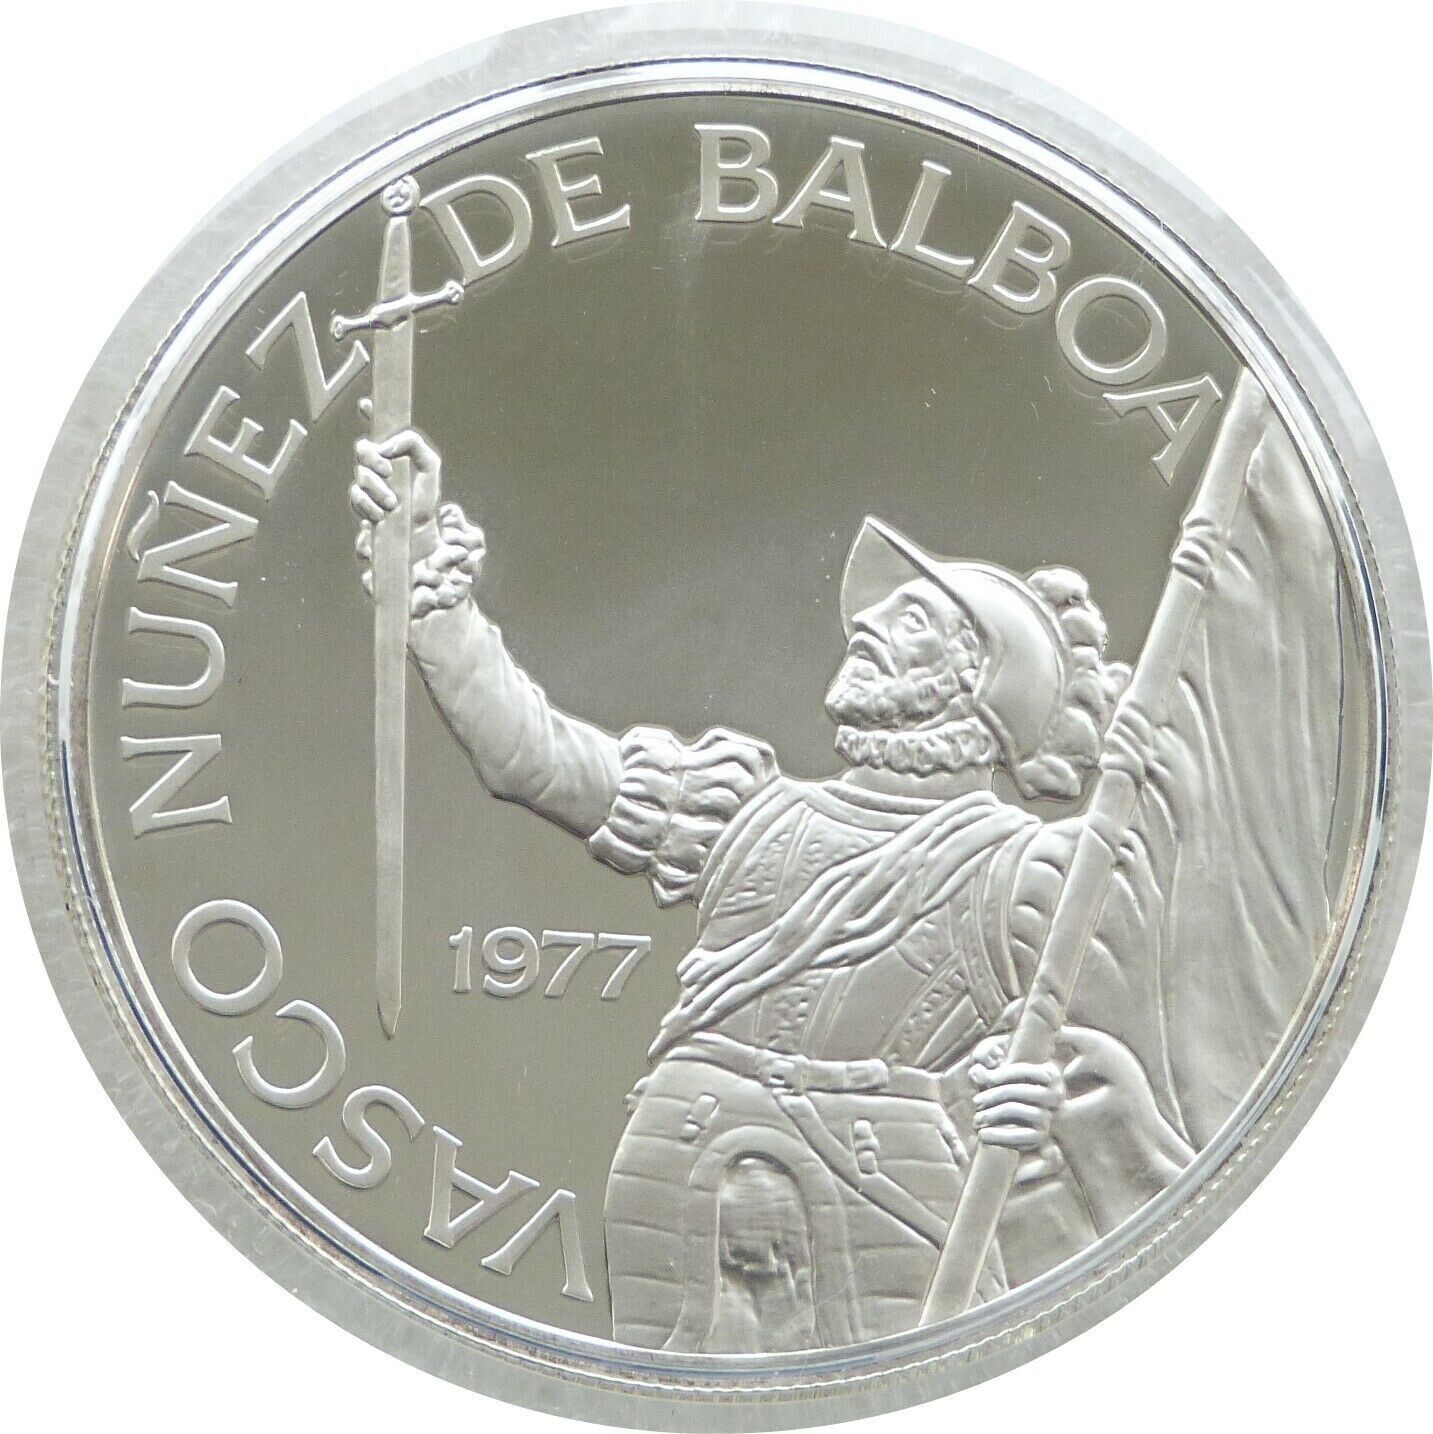 1977 Panama Vasco Nunez Large 20 Balboa Silver Proof Coin Box Coa